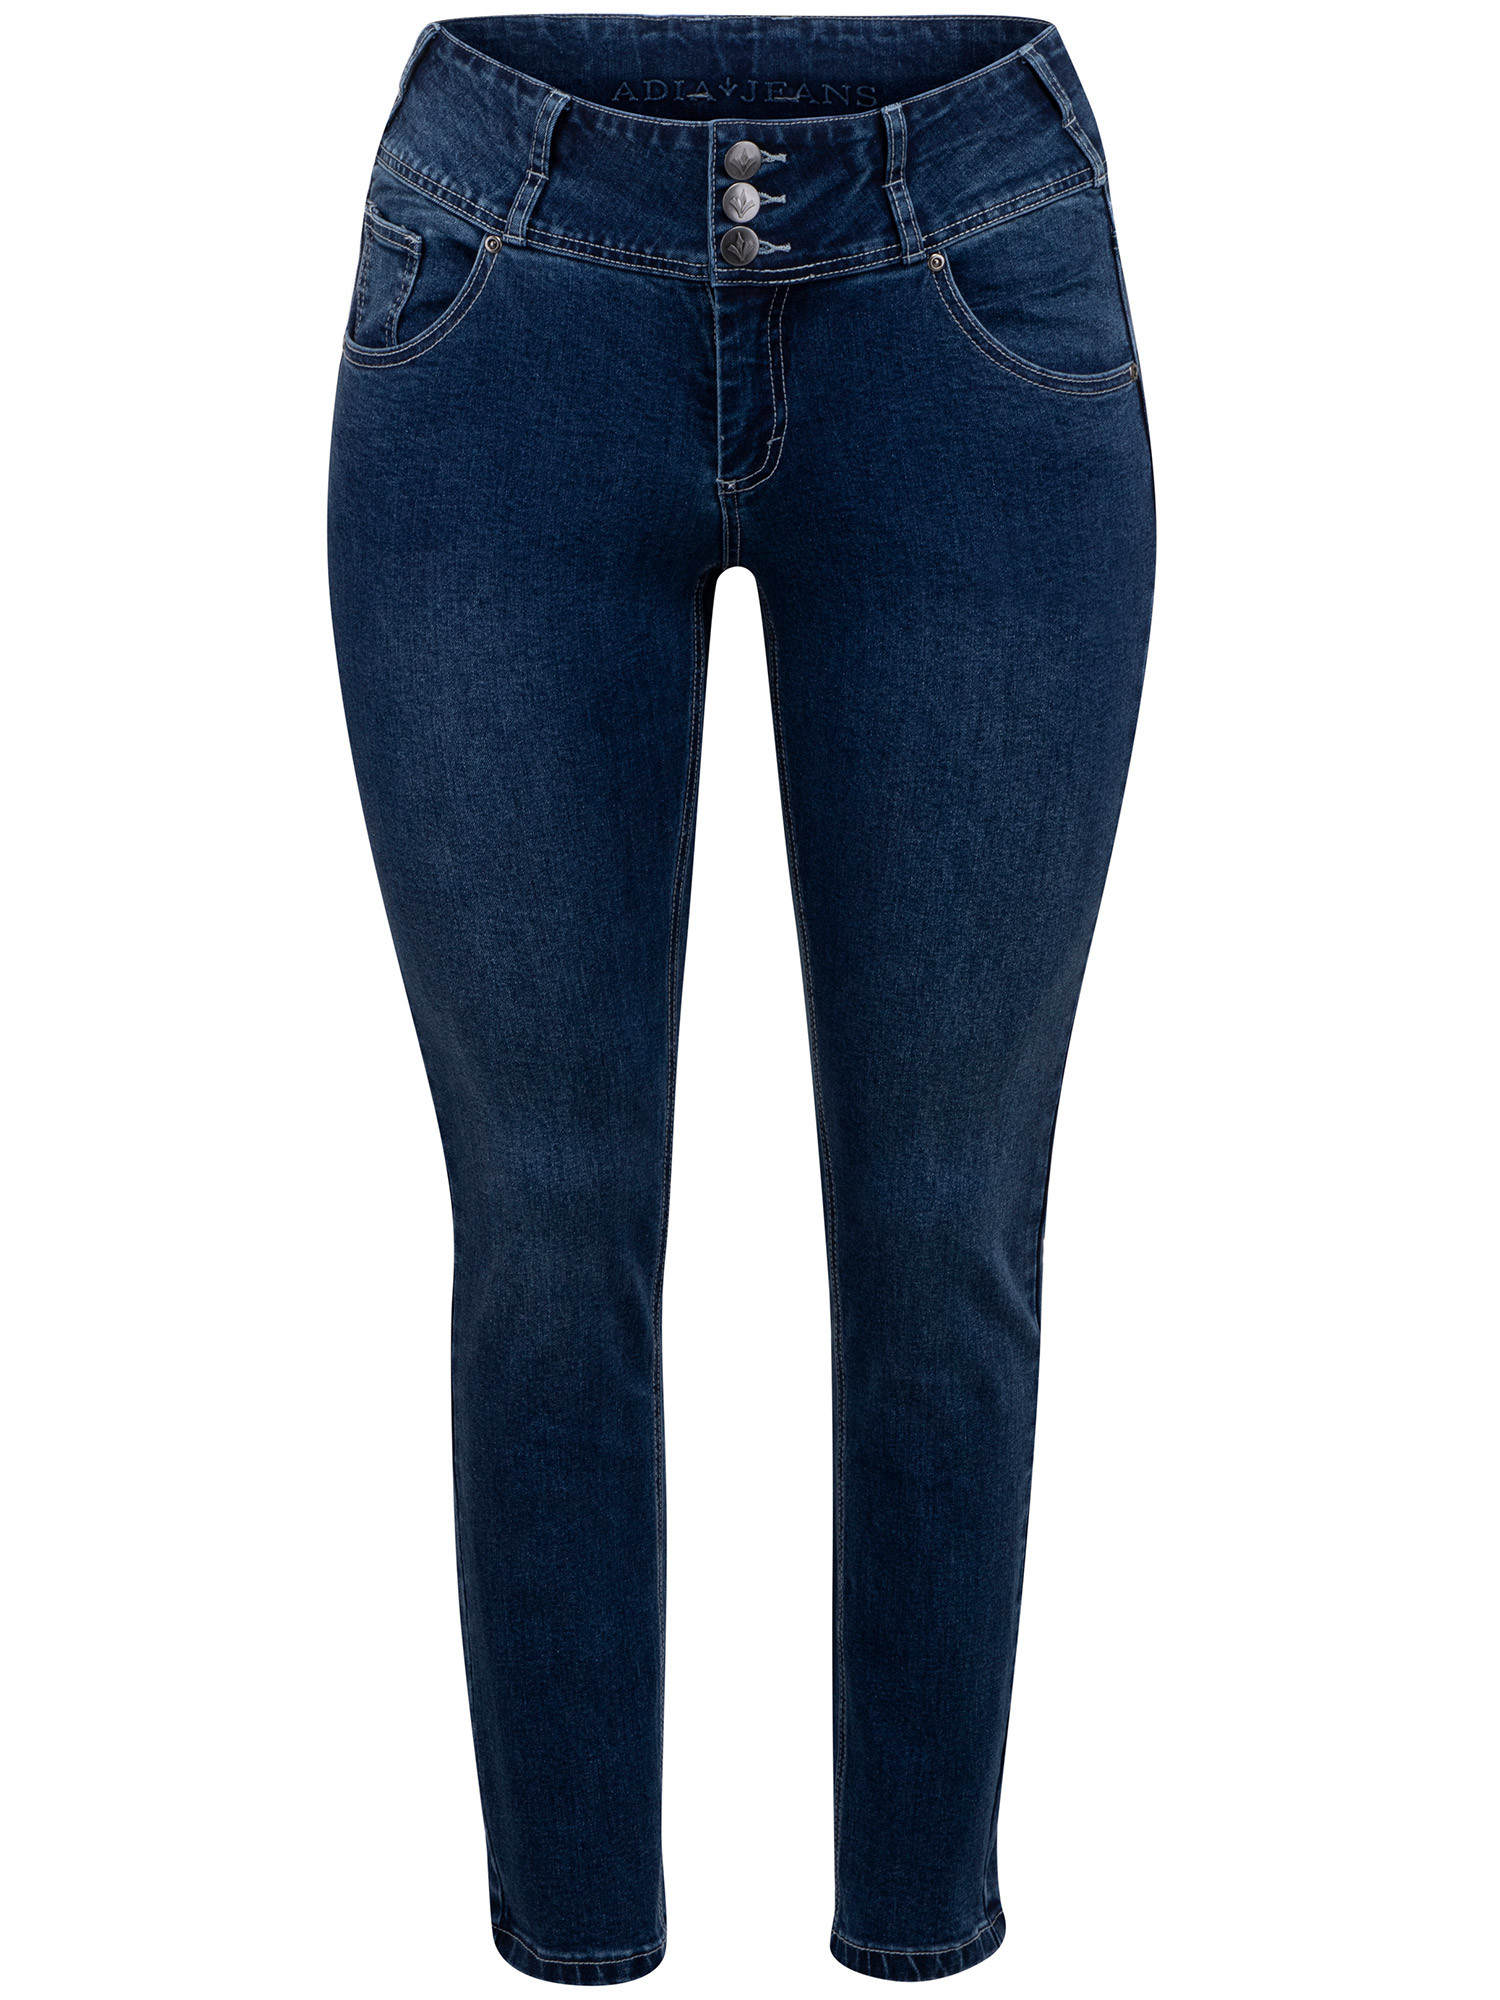 MILAN - Ljusblå stretchiga jeans